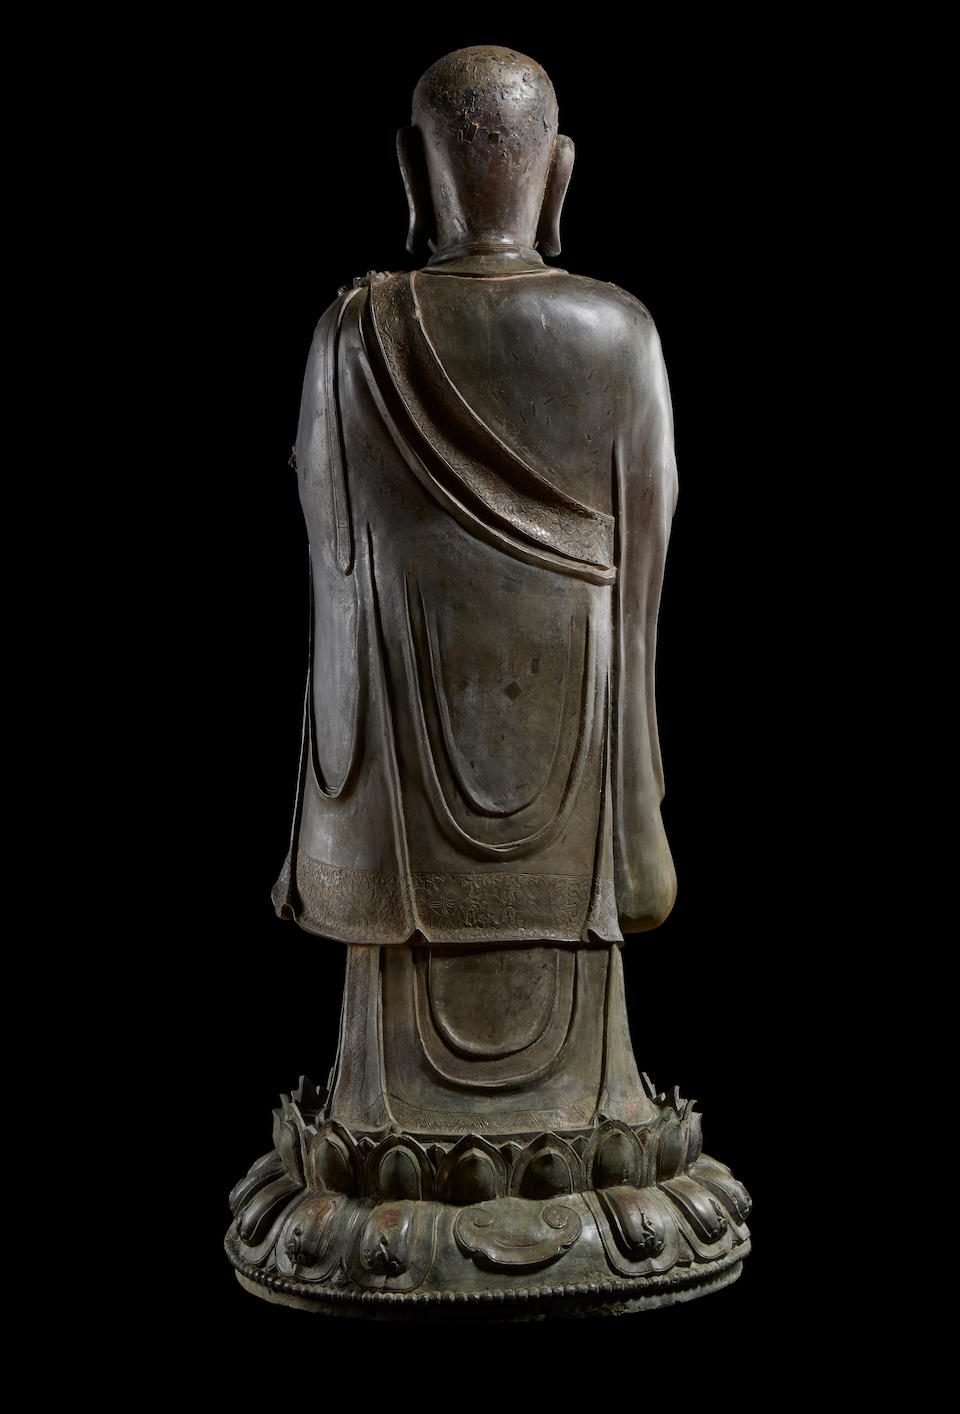 A rare monumental bronze figure of Mahakasyapa Ming dynasty